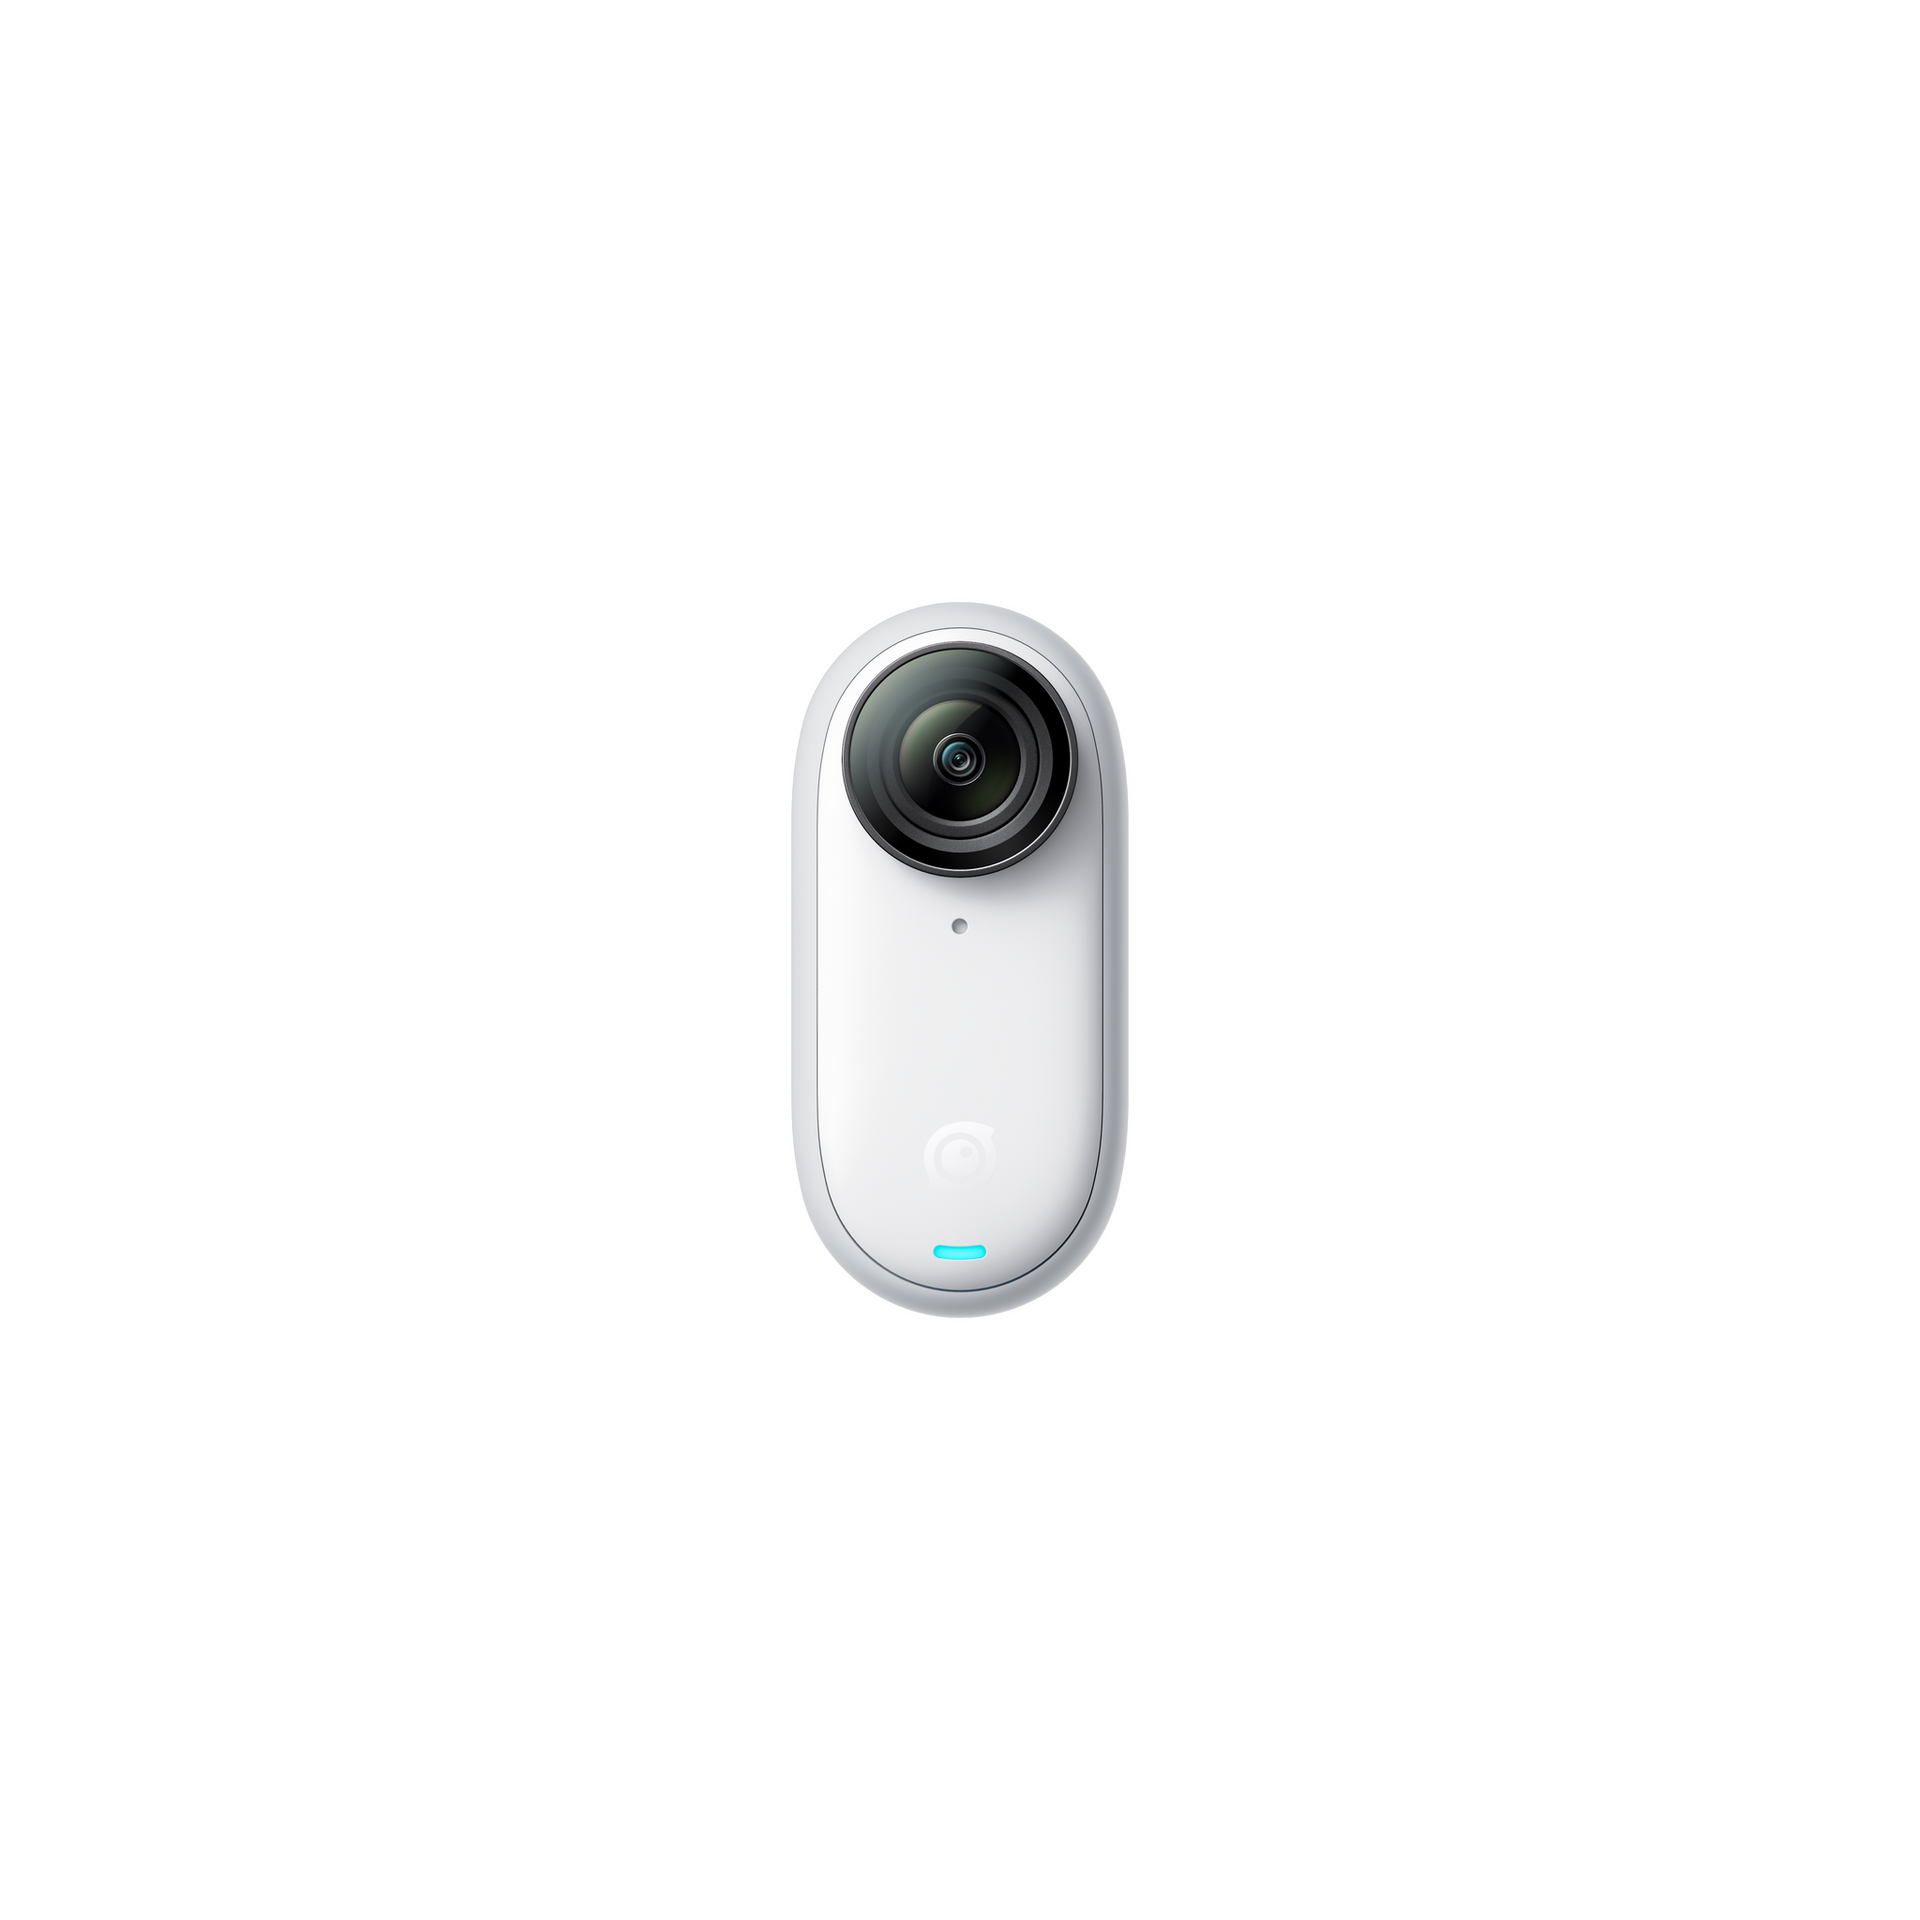 Insta360 GO 3発売。超小型どこでもカメラが大幅進化、画面付き ...